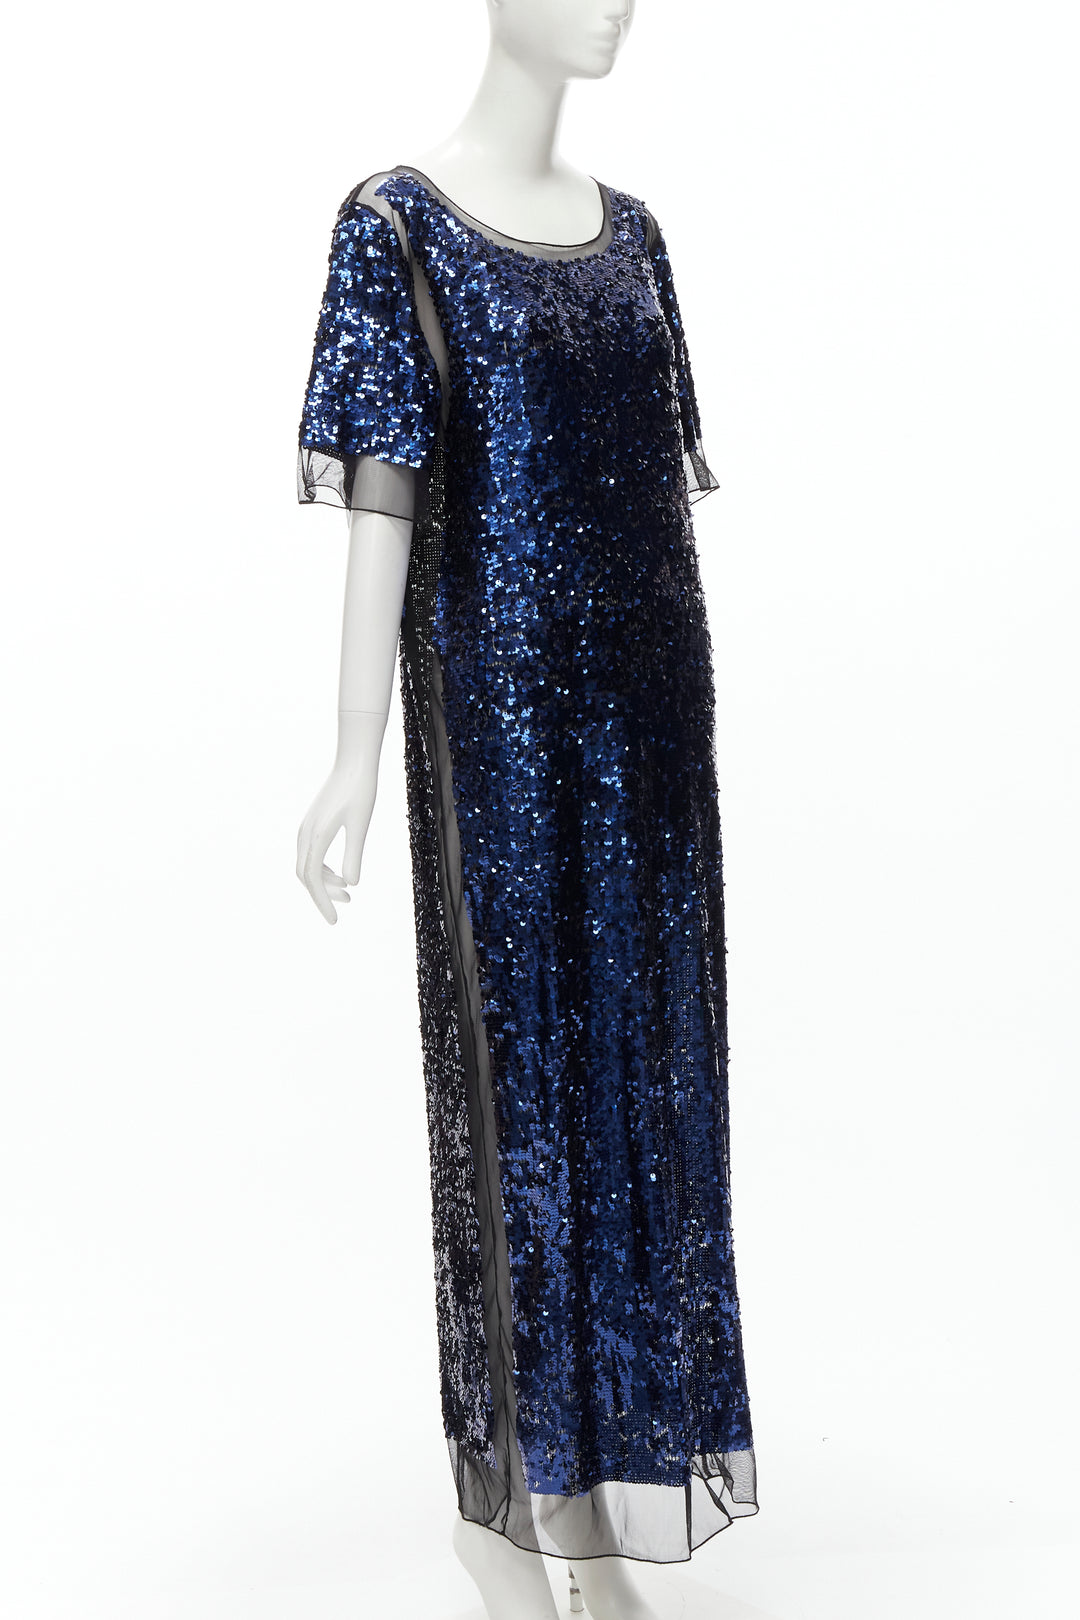 BY MALENE BIRGER blue sequins overlay black sheer evening gown dress M